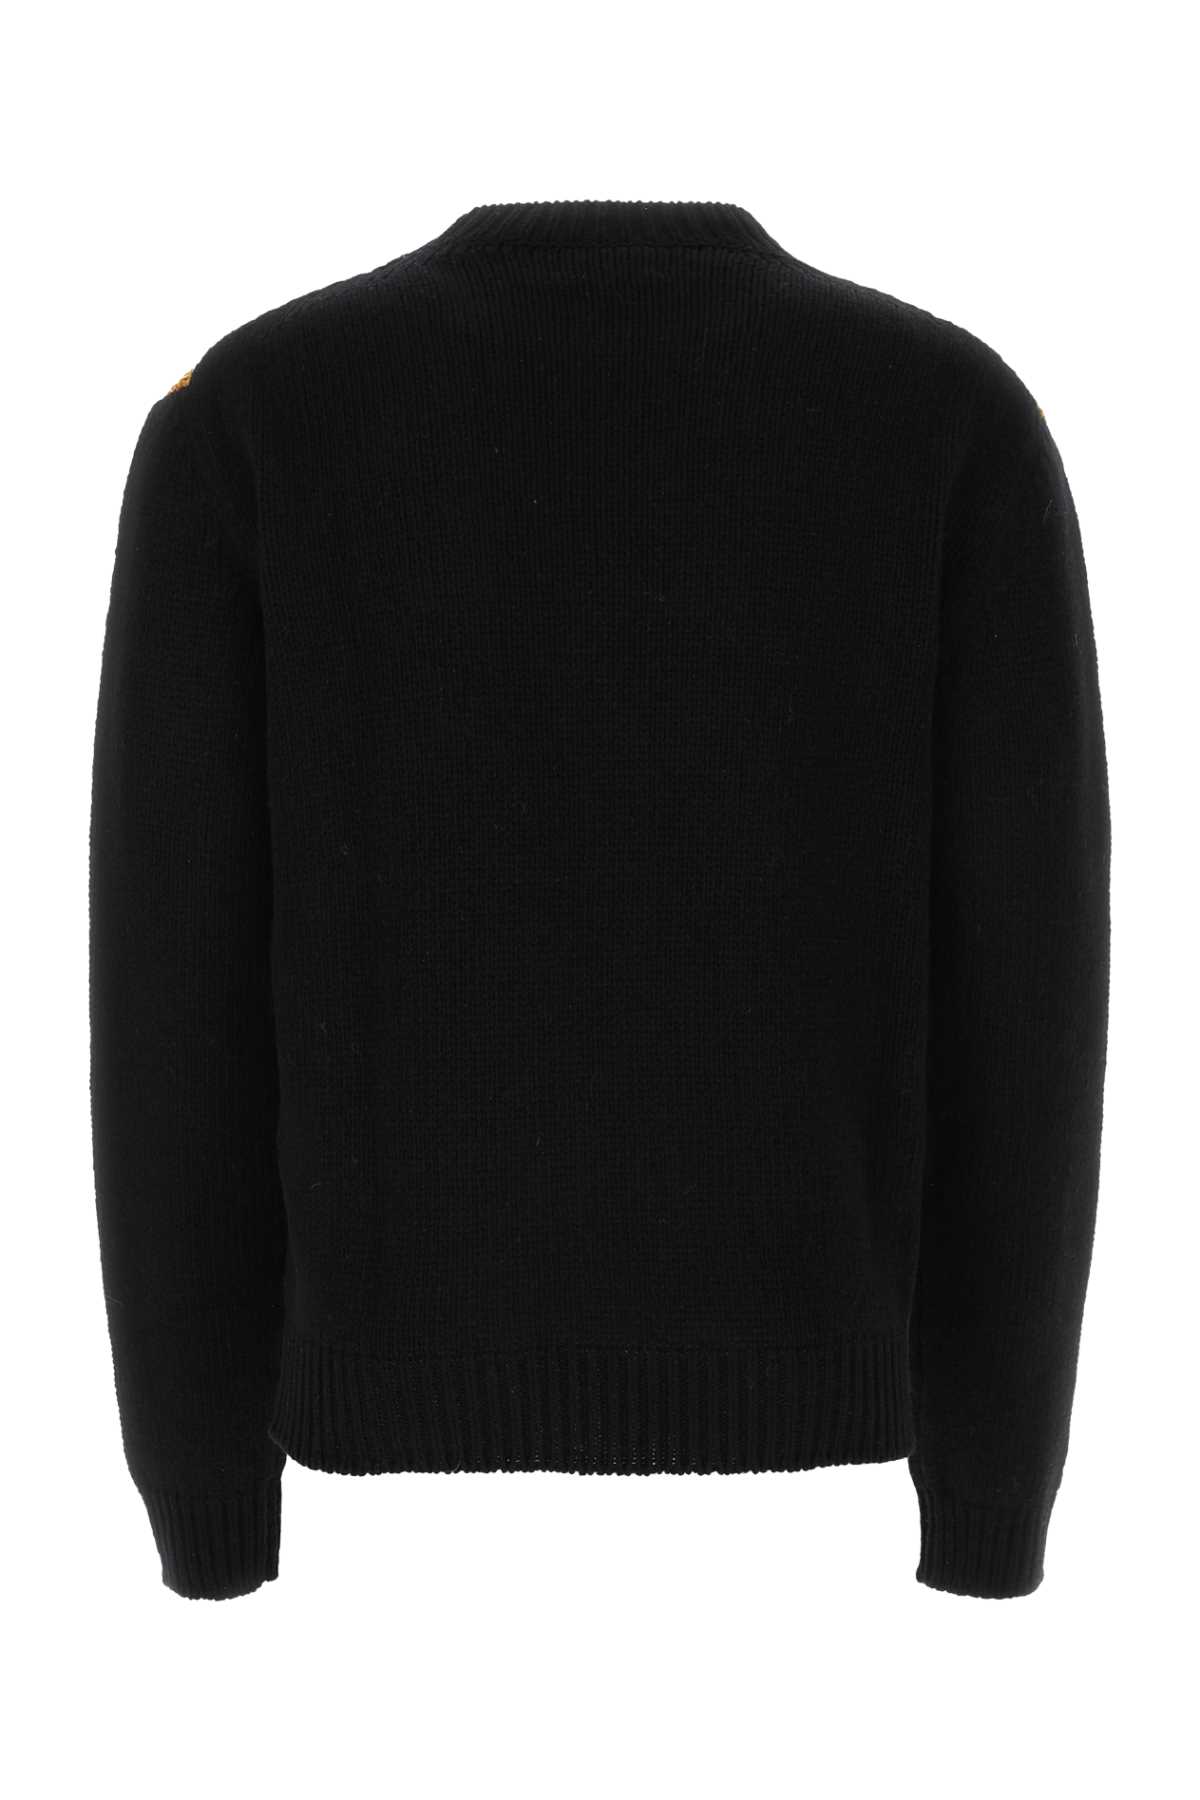 Marni Black Wool Blend Sweater In Inn99